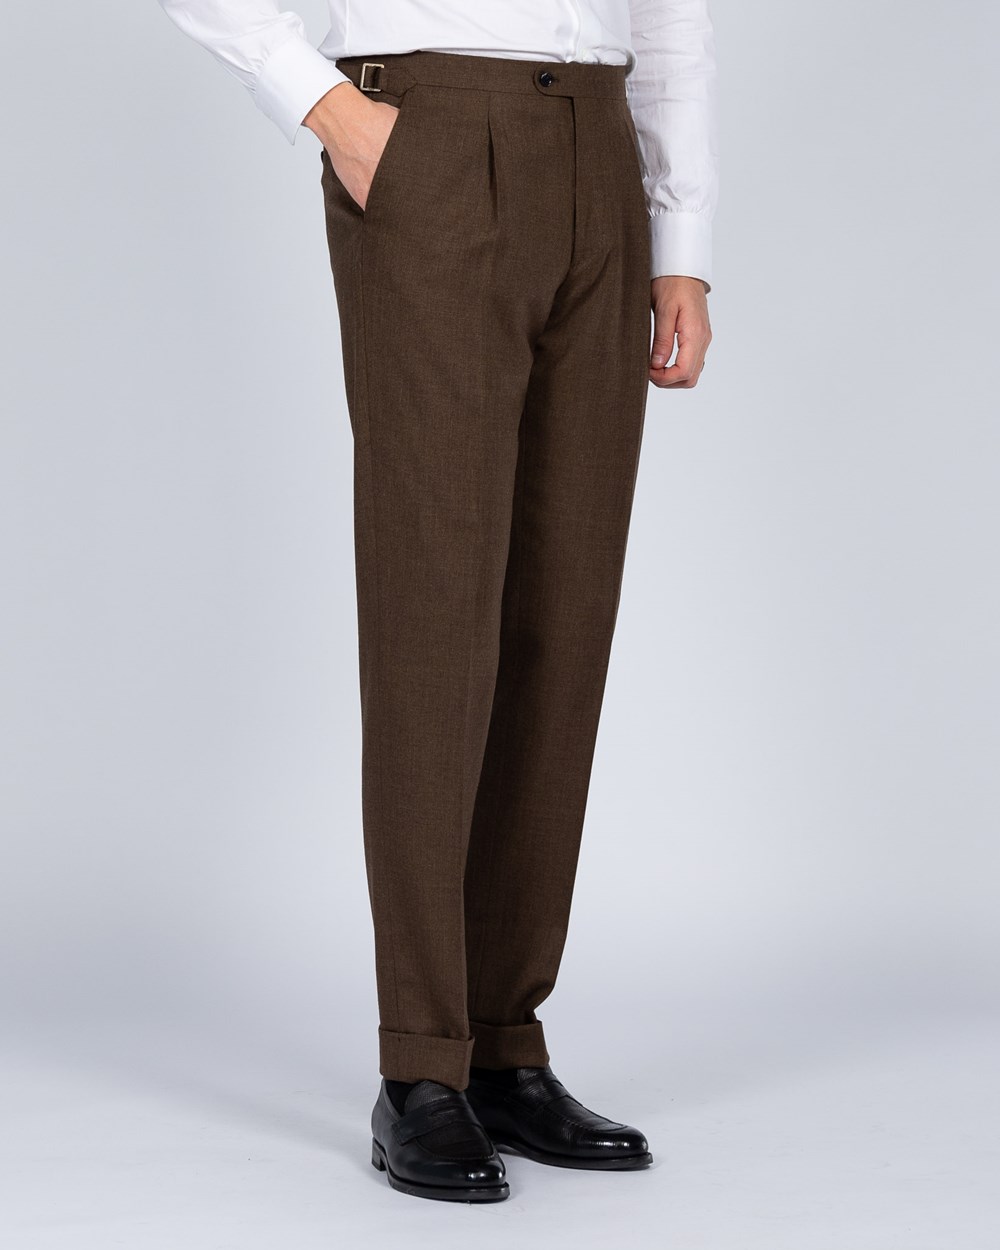 Mod 2 - Single Pleat Crispaire Trouser